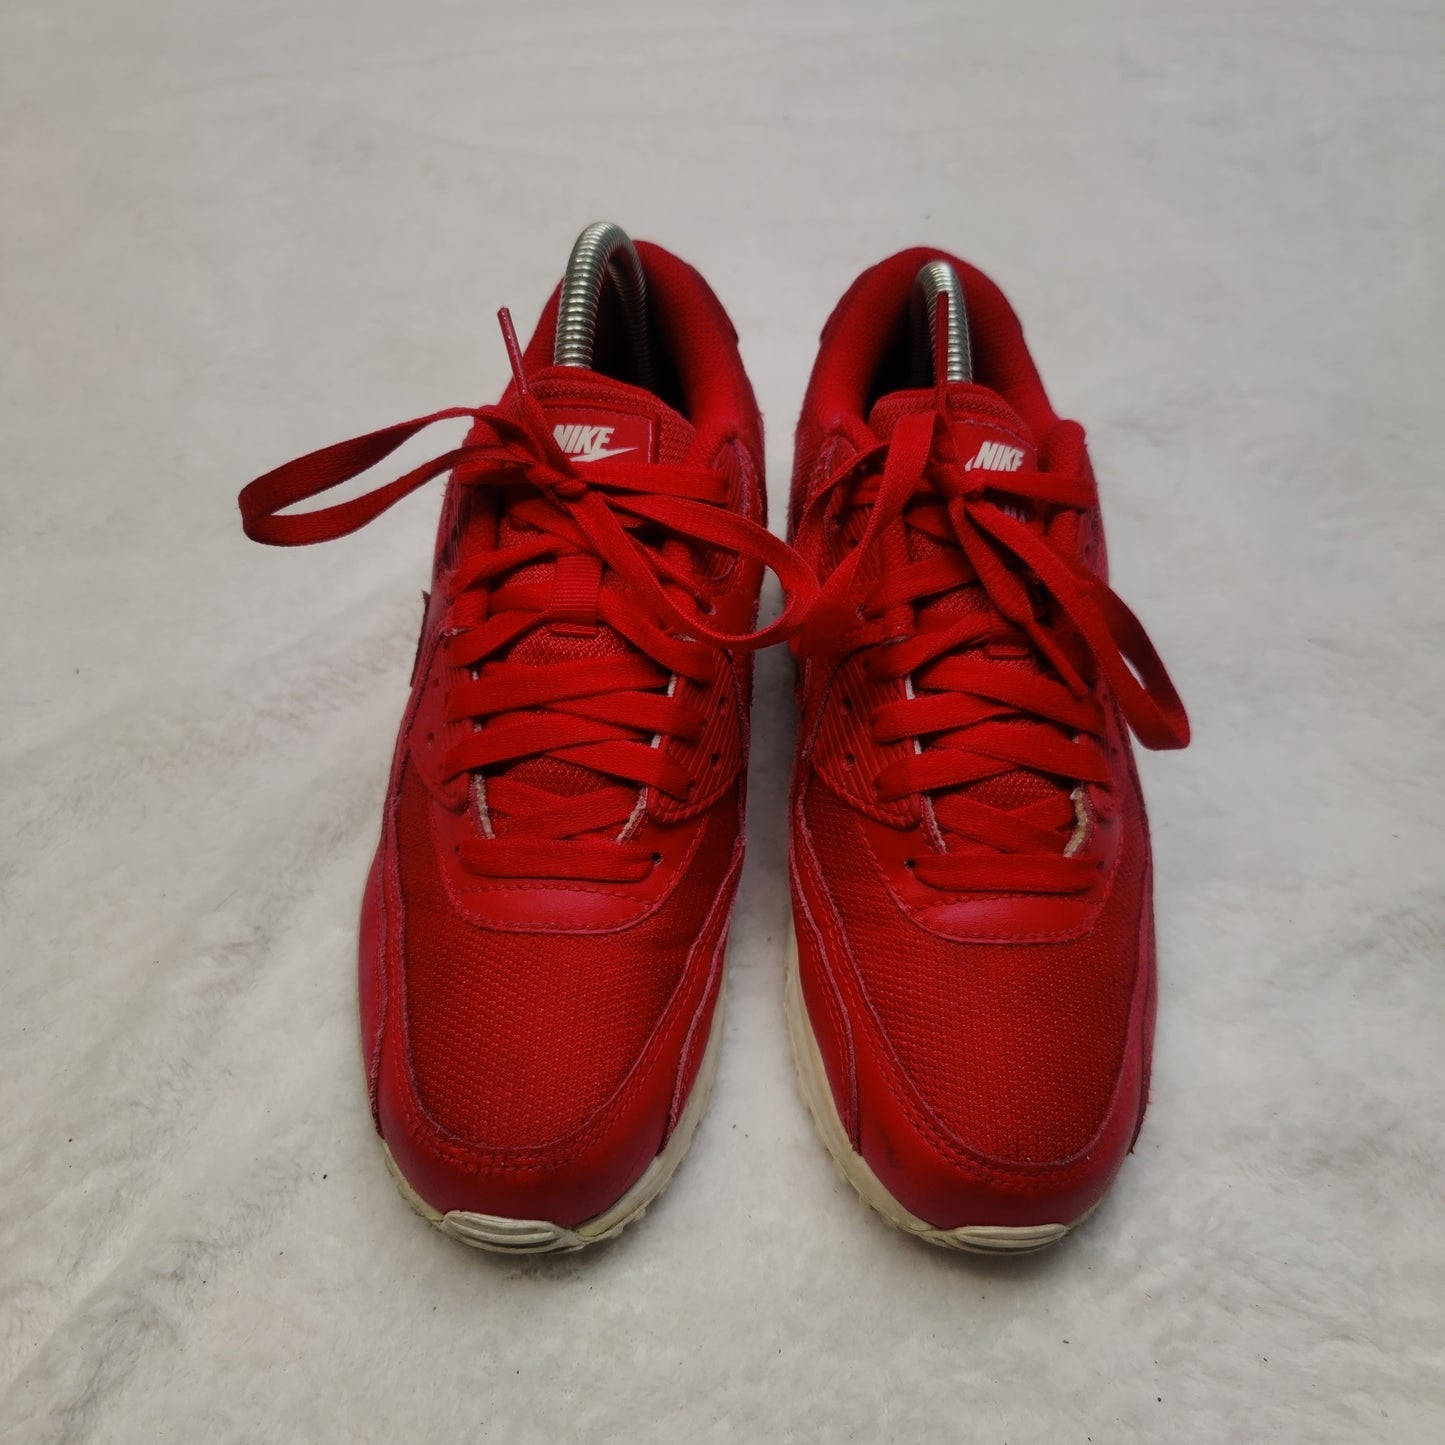 Nike iD Air Max Red Sneaker Trainers Shoes Women Size UK 5 EU 38.5